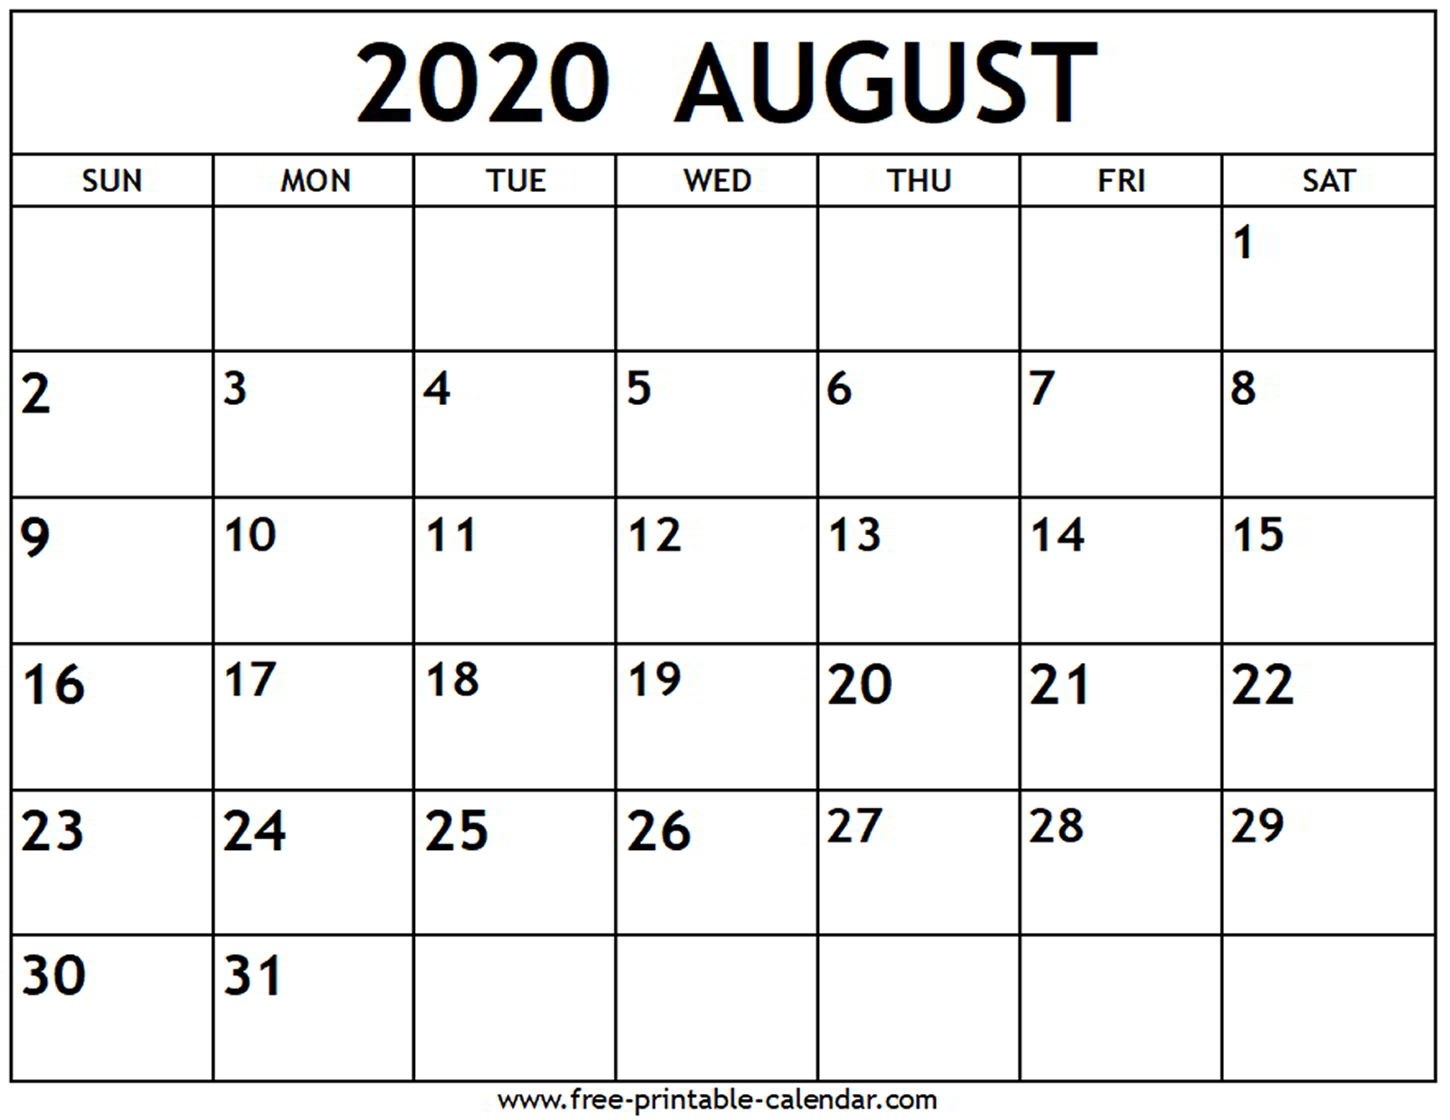 August 2020 Calendar - Free-Printable-Calendar-Calendar Template 2020 June July